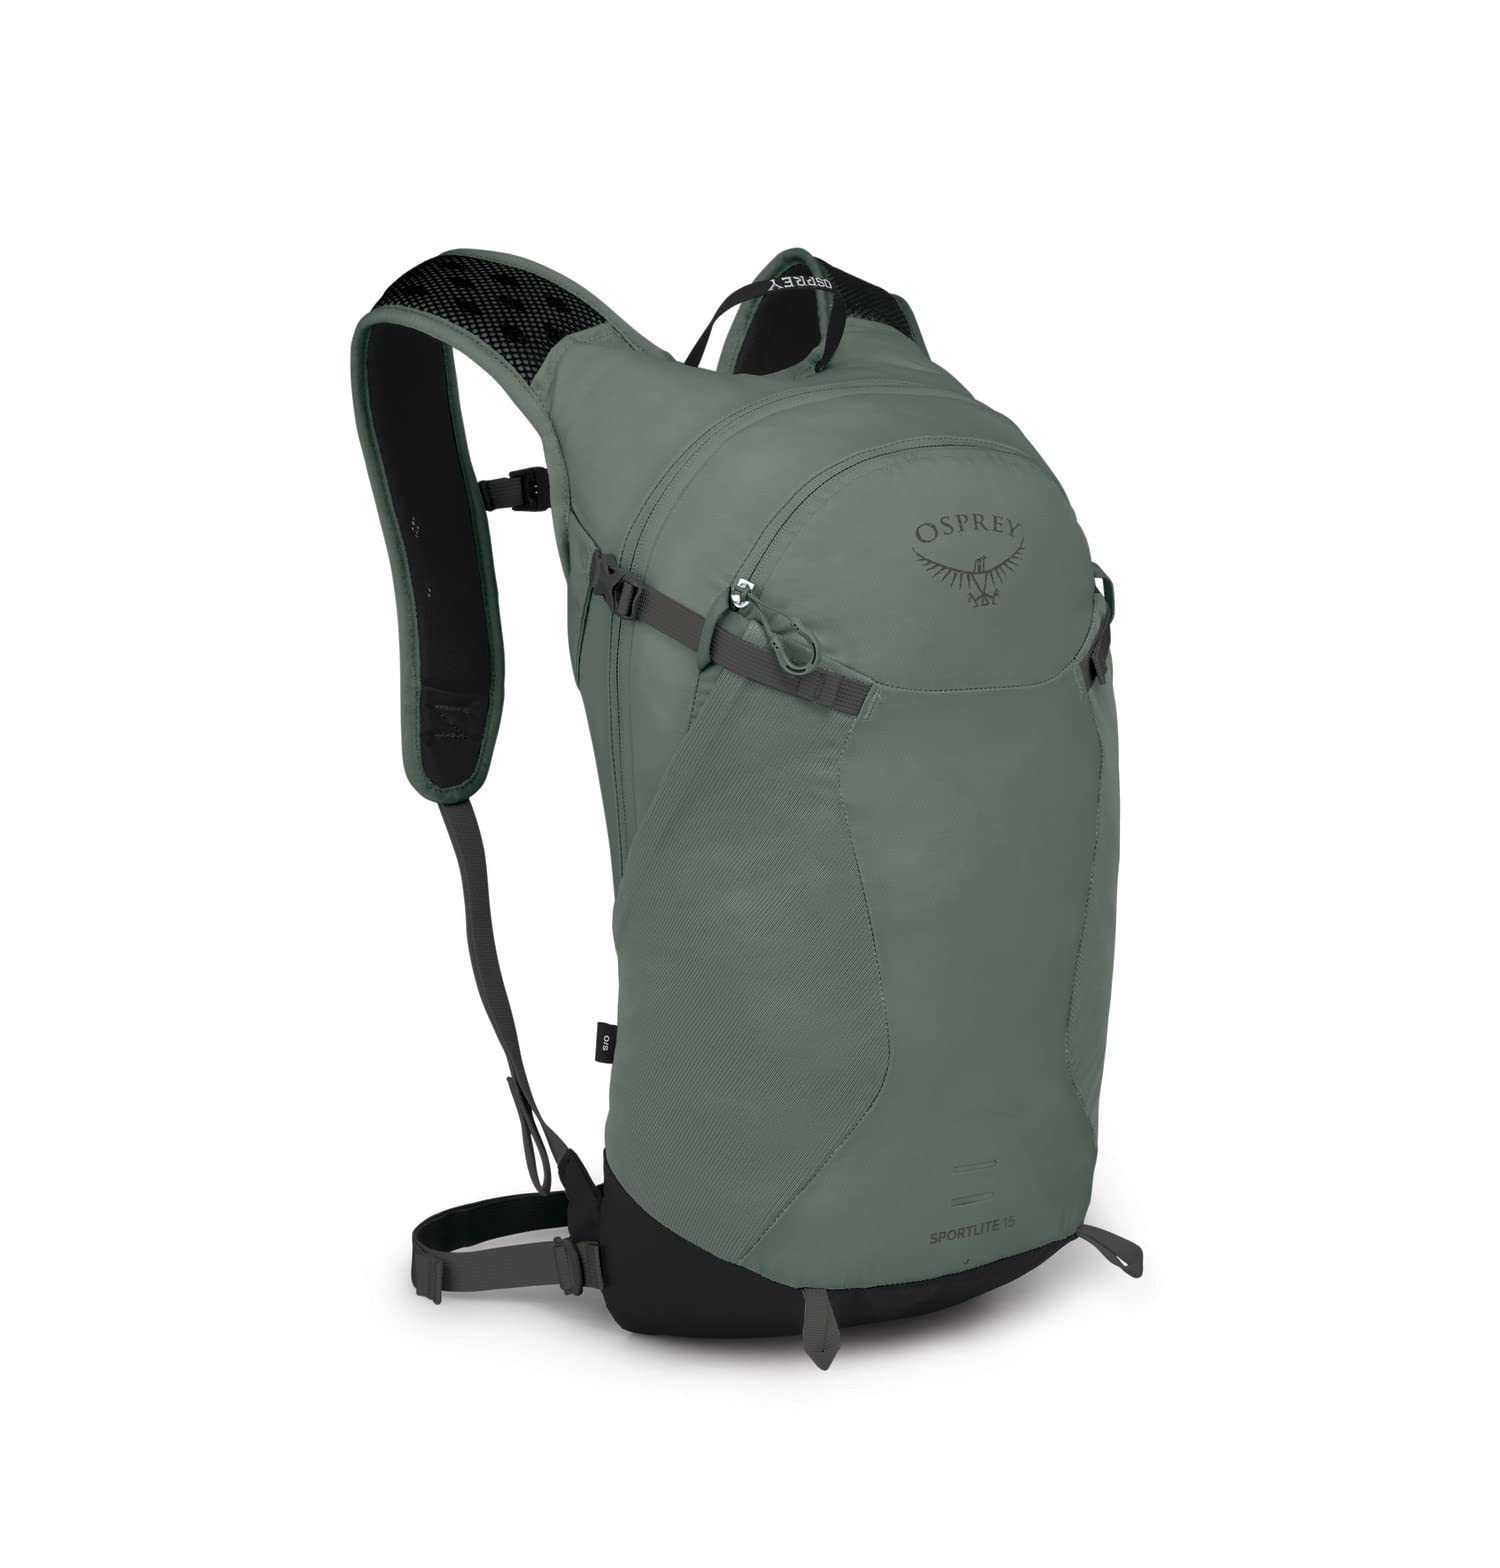 Osprey Sportlite 15 Hiking Backpack, Pine Leaf Green